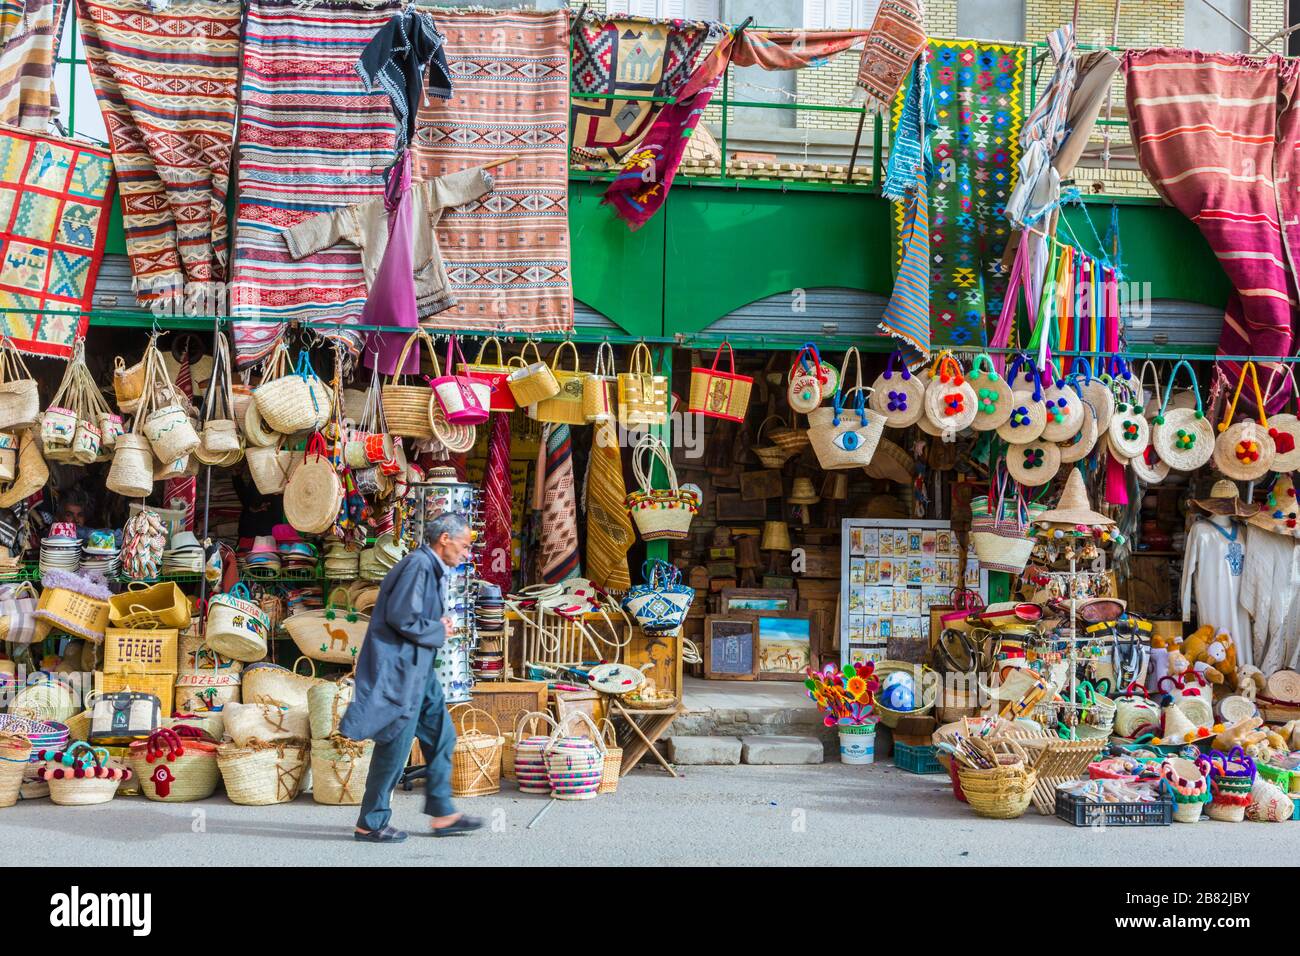 Basket shop in a market. Stock Photo